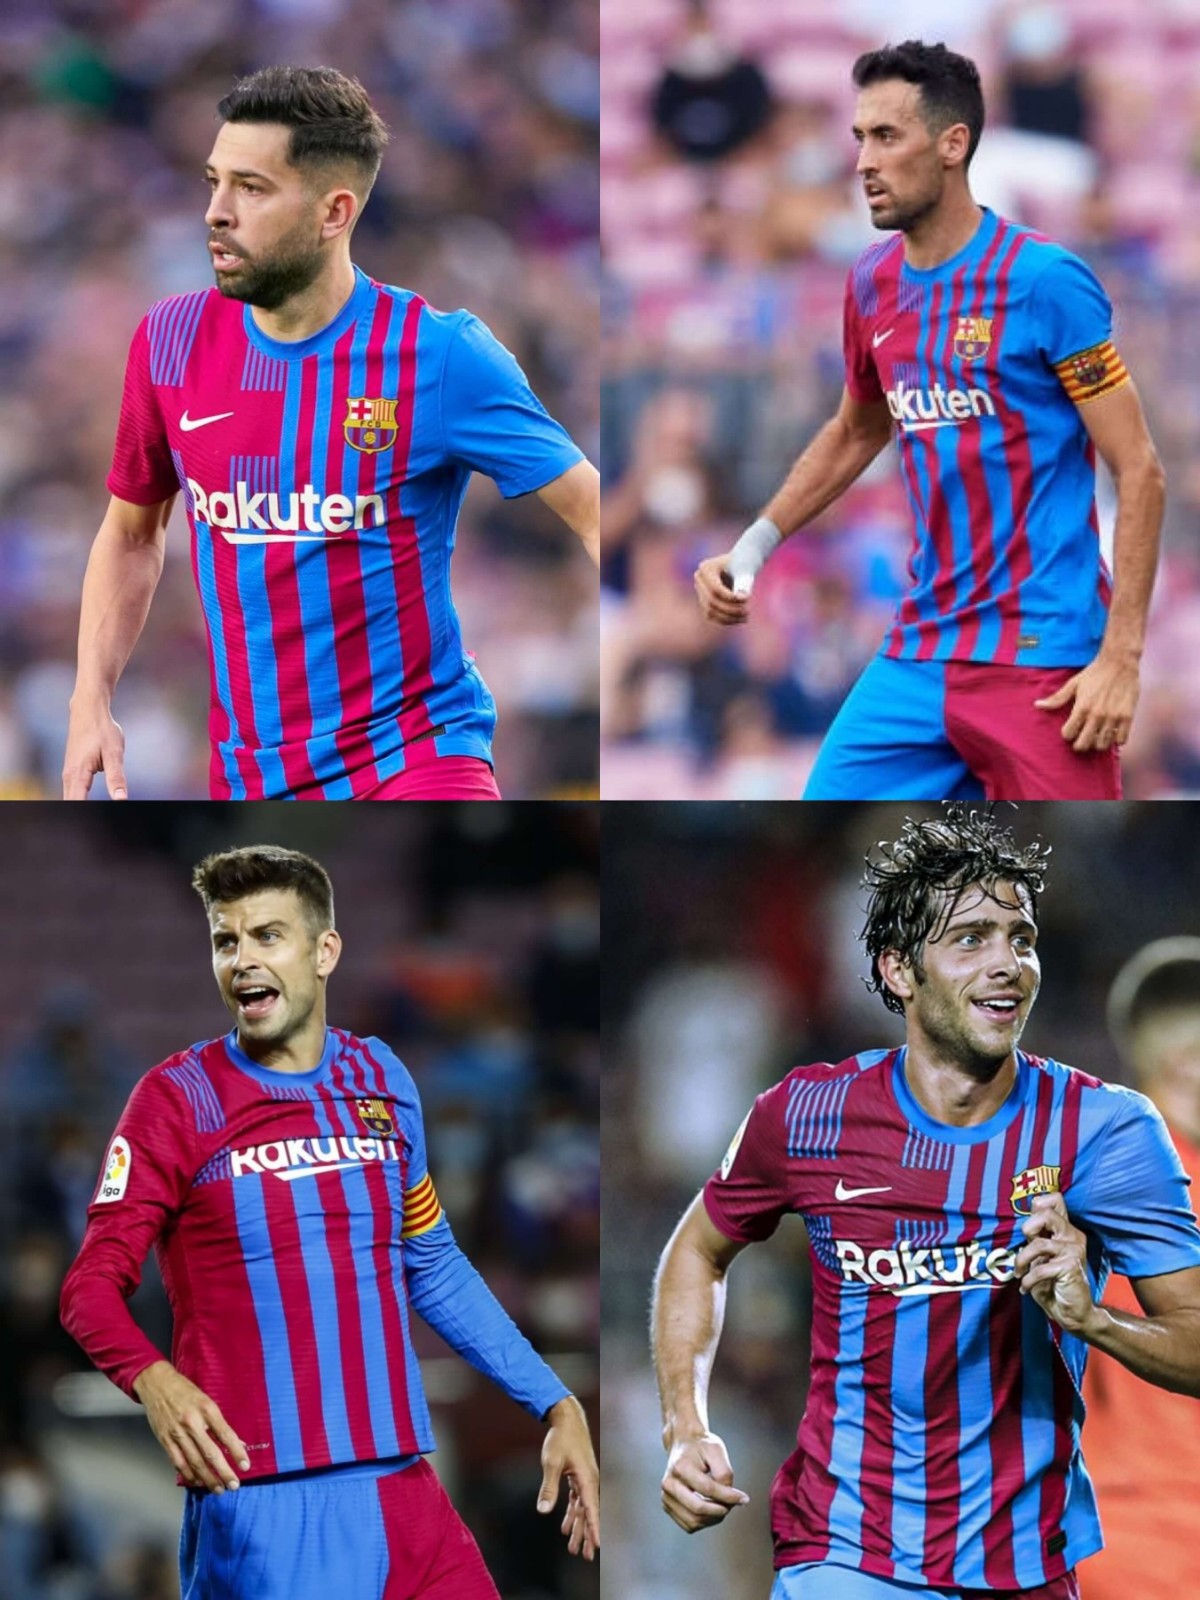 new Barcelona soccer jersey